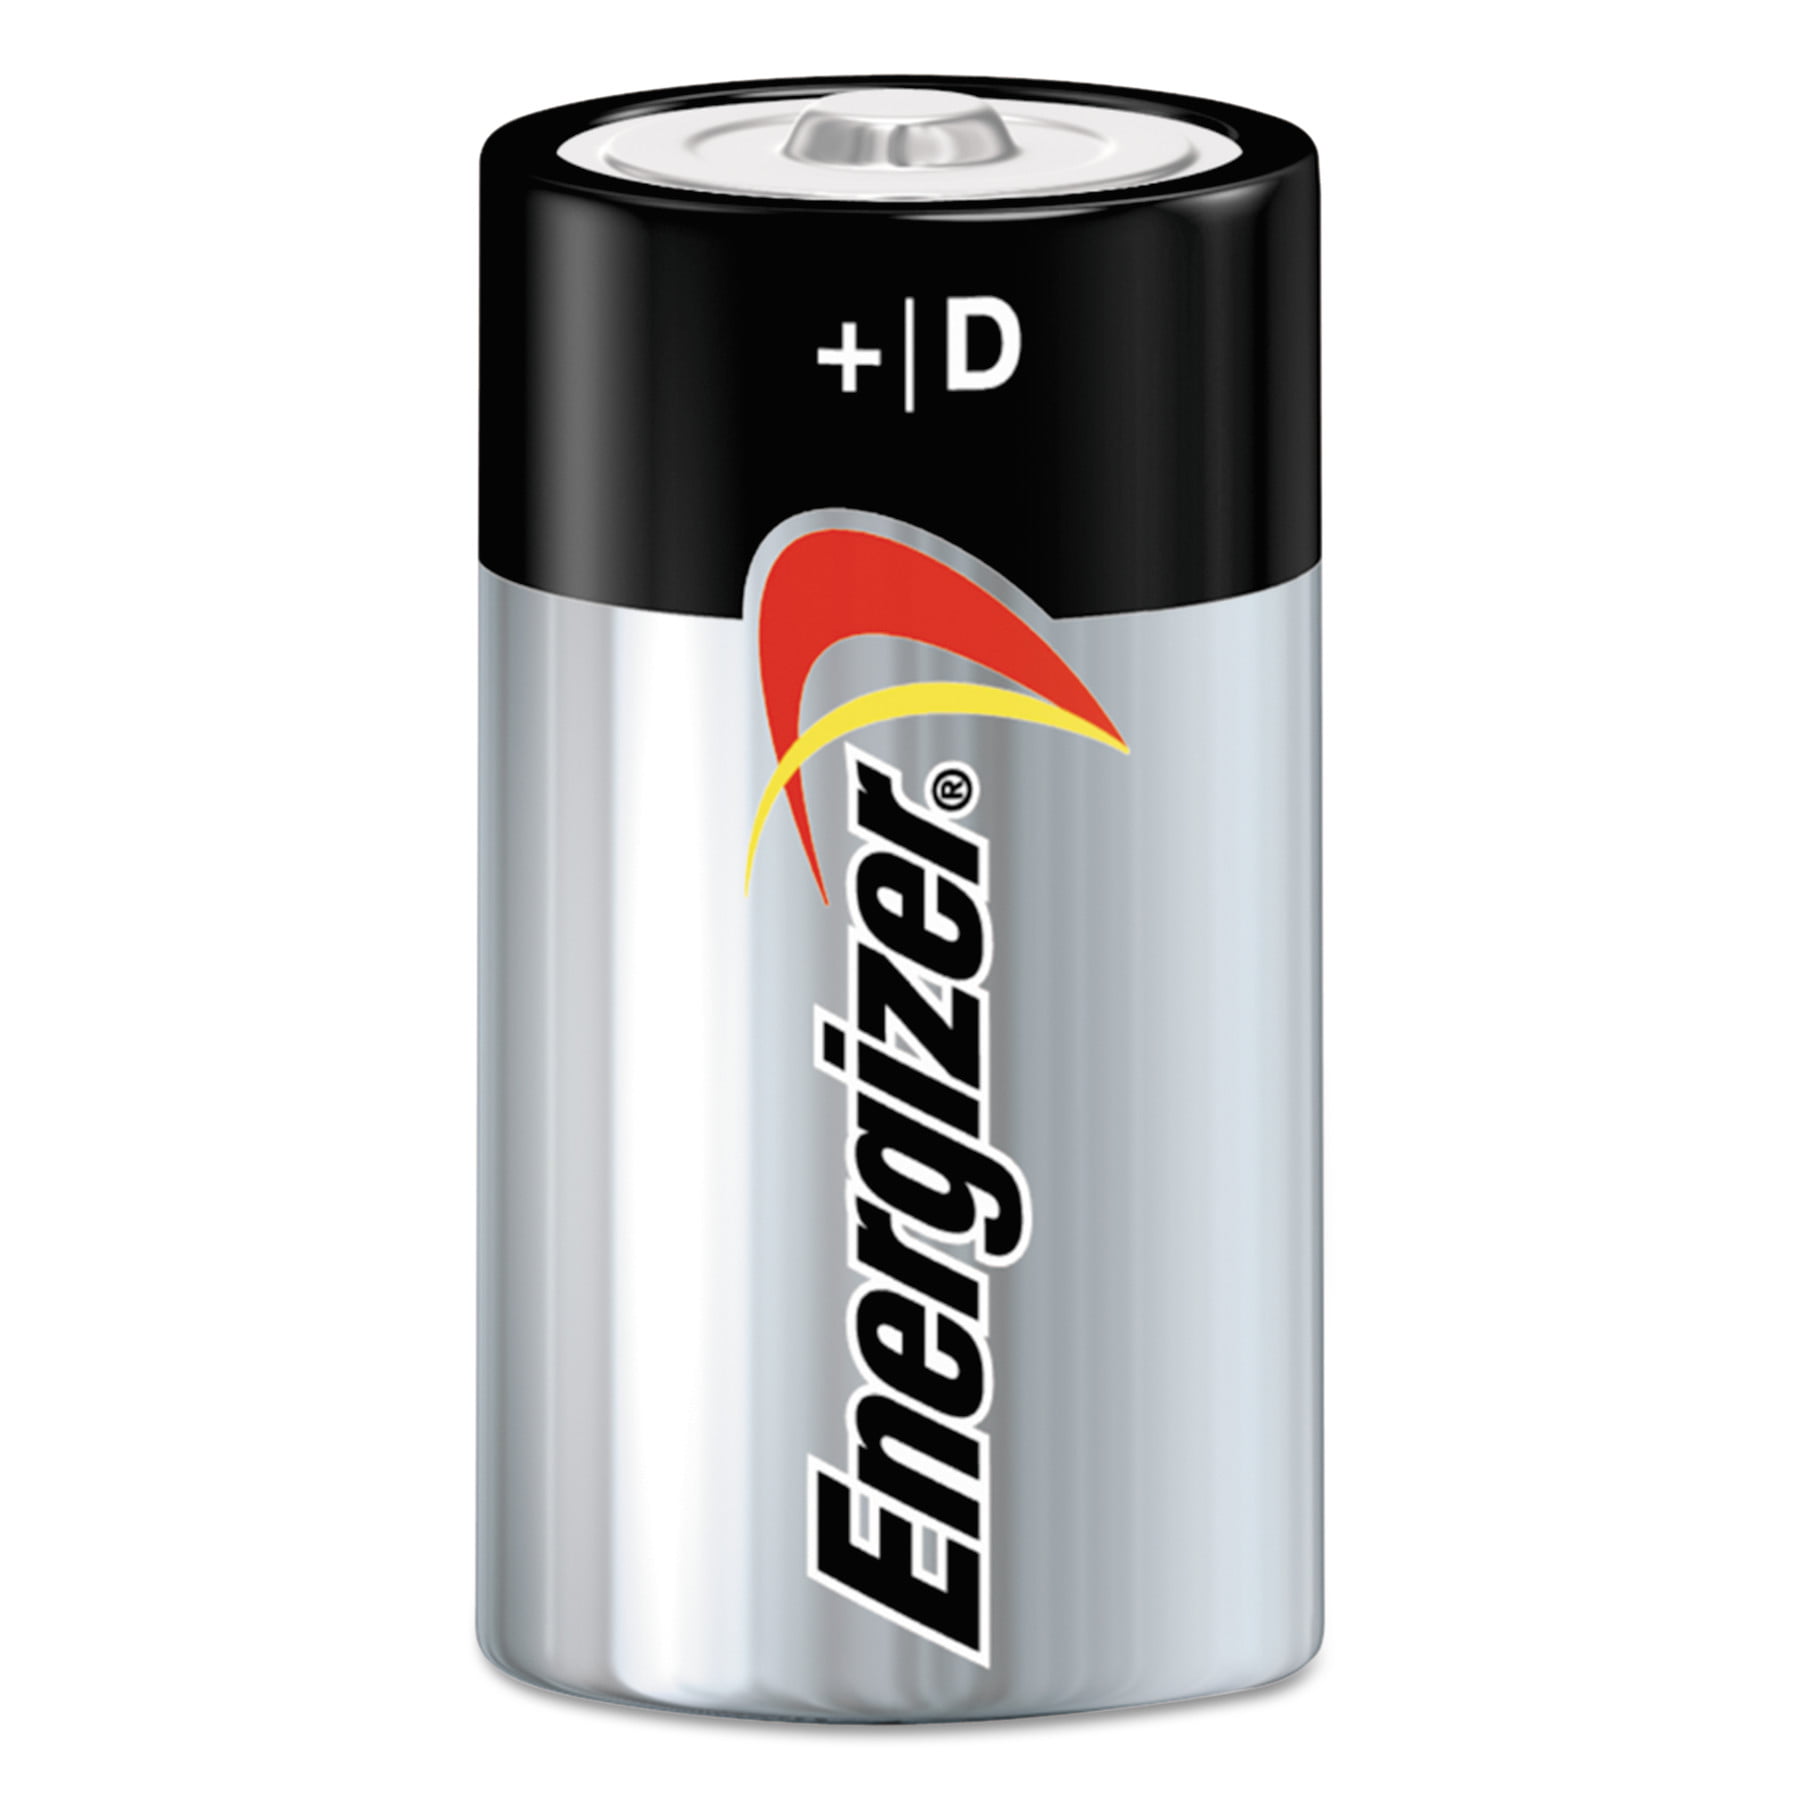 C batteries. Батарейка Energizer lr20. Energizer lr14 bl2. Батарейка d Energizer lr20 Max (2-BL) (24). Щелочная батарейка lr20 d Max 1.5в бл/2 Energizer.